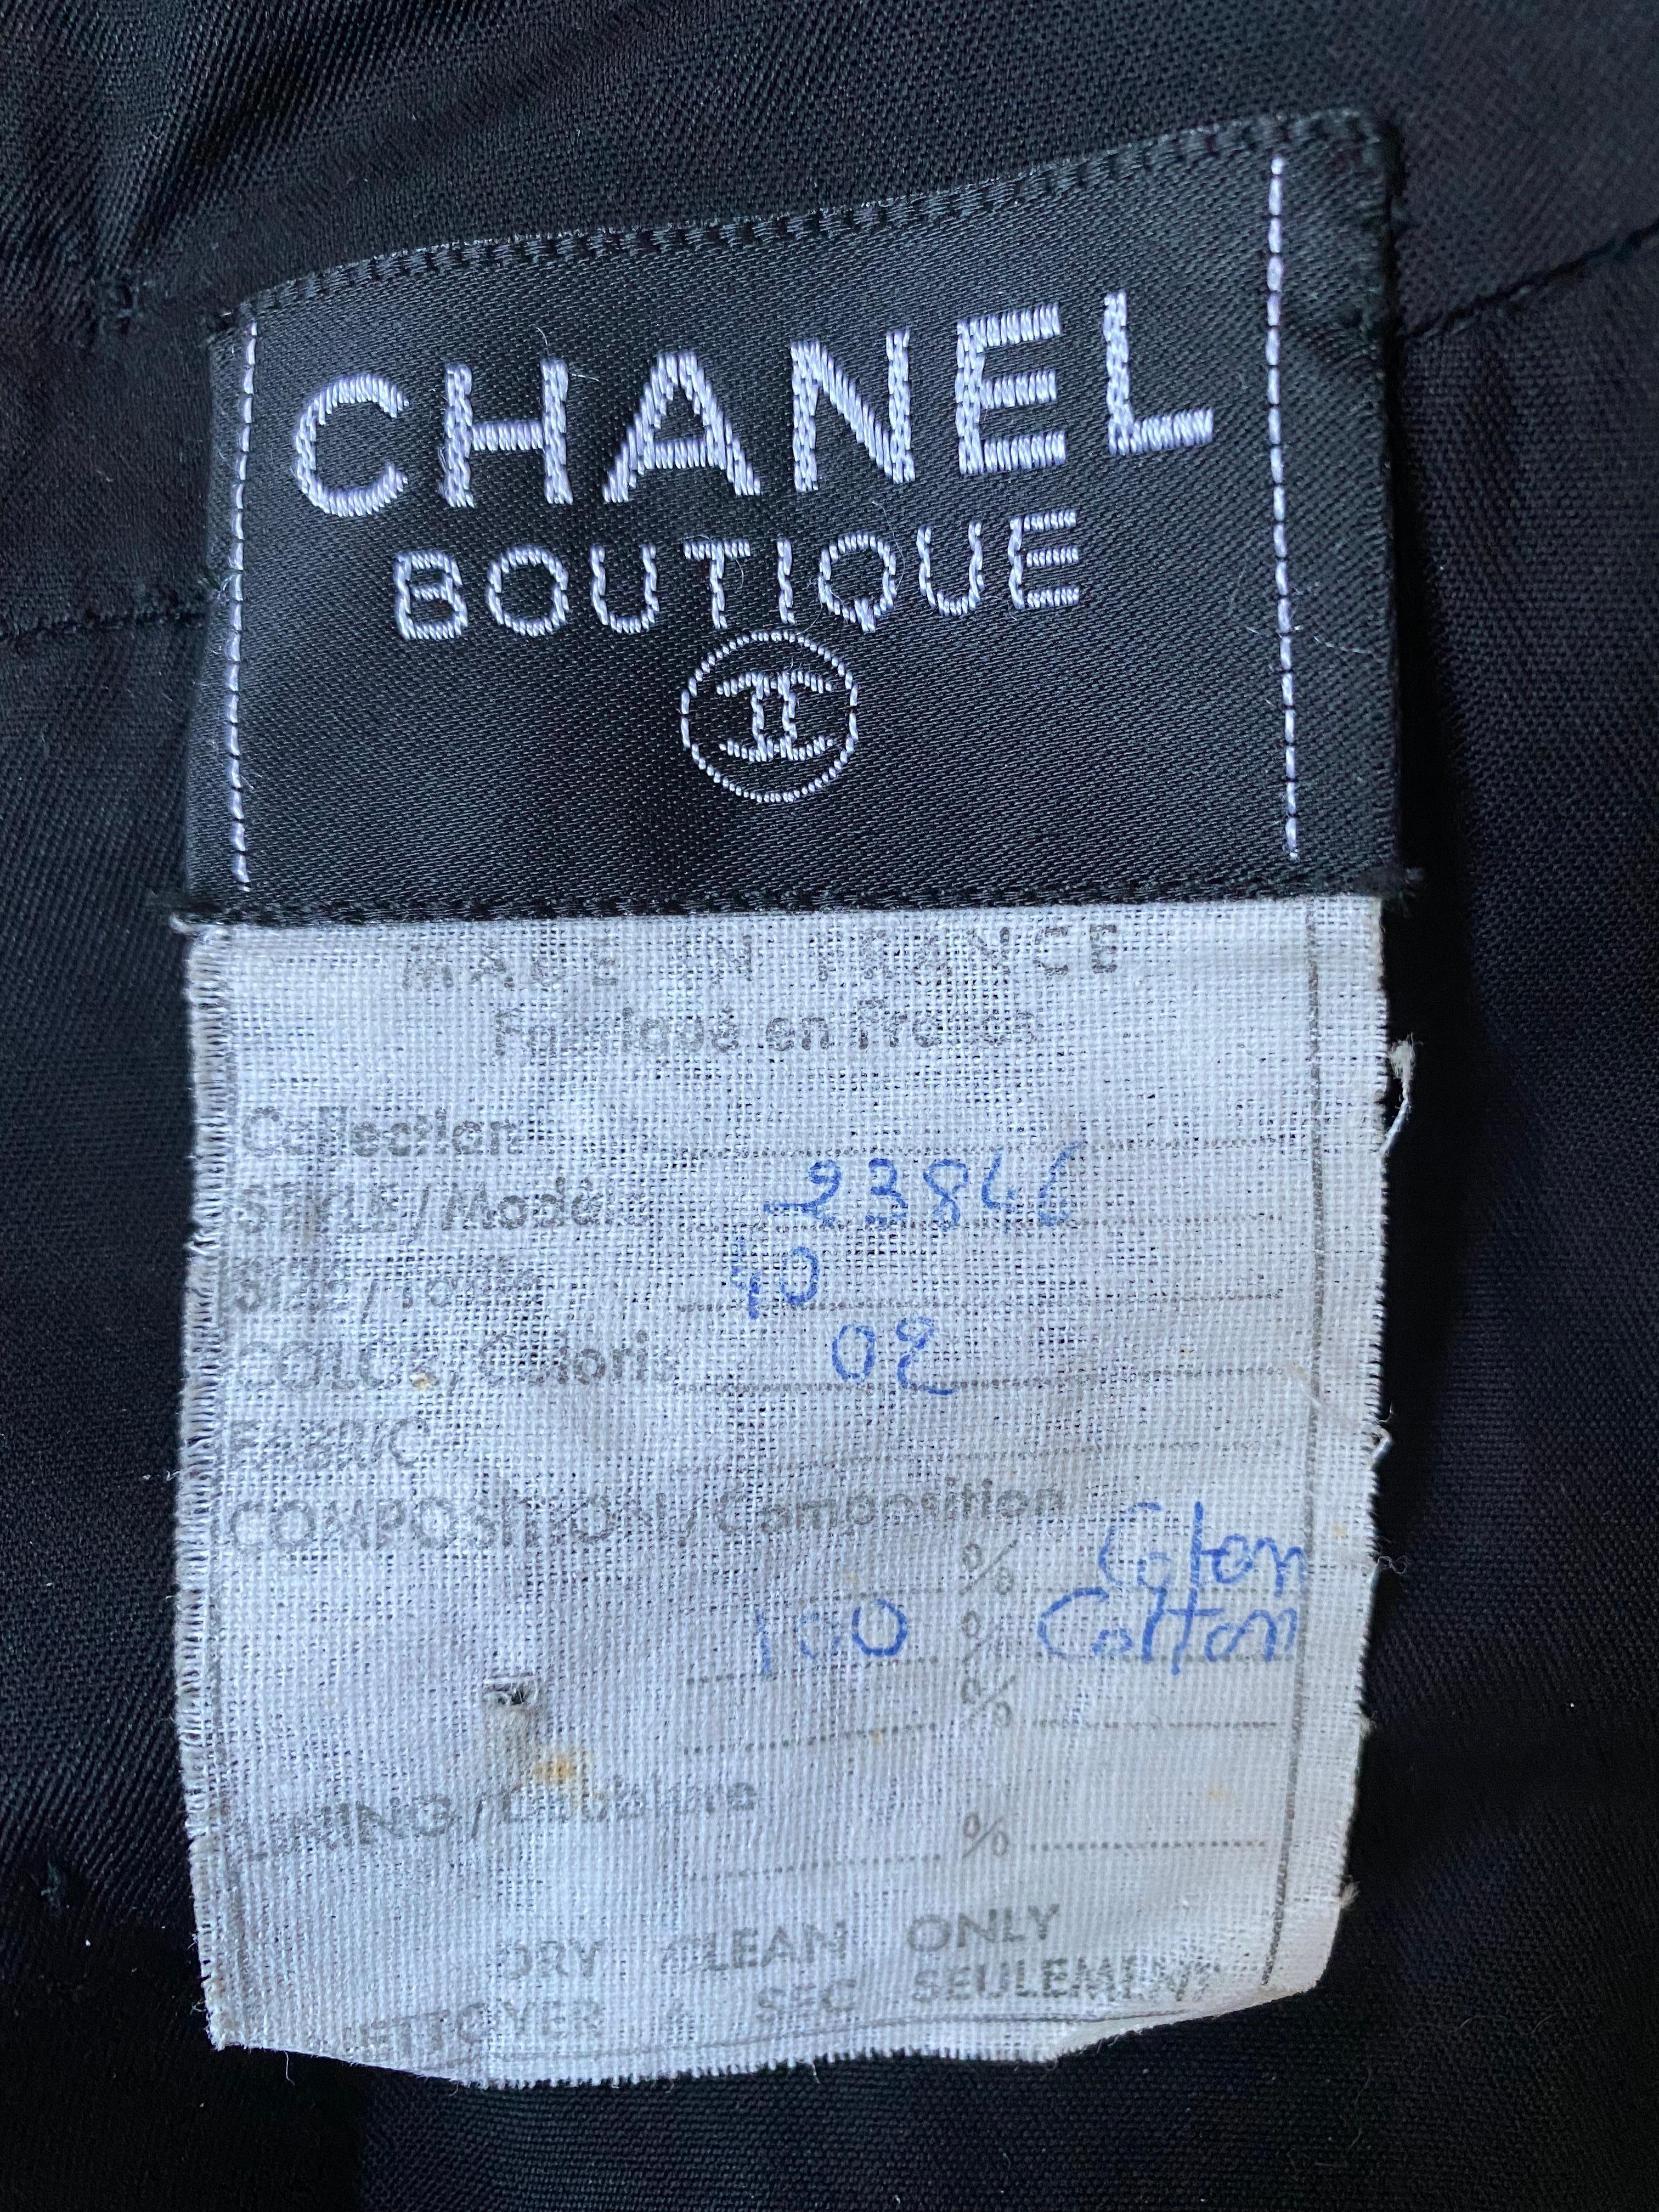 1986 Runway Chanel Black Cotton Peplum Dress For Sale 2